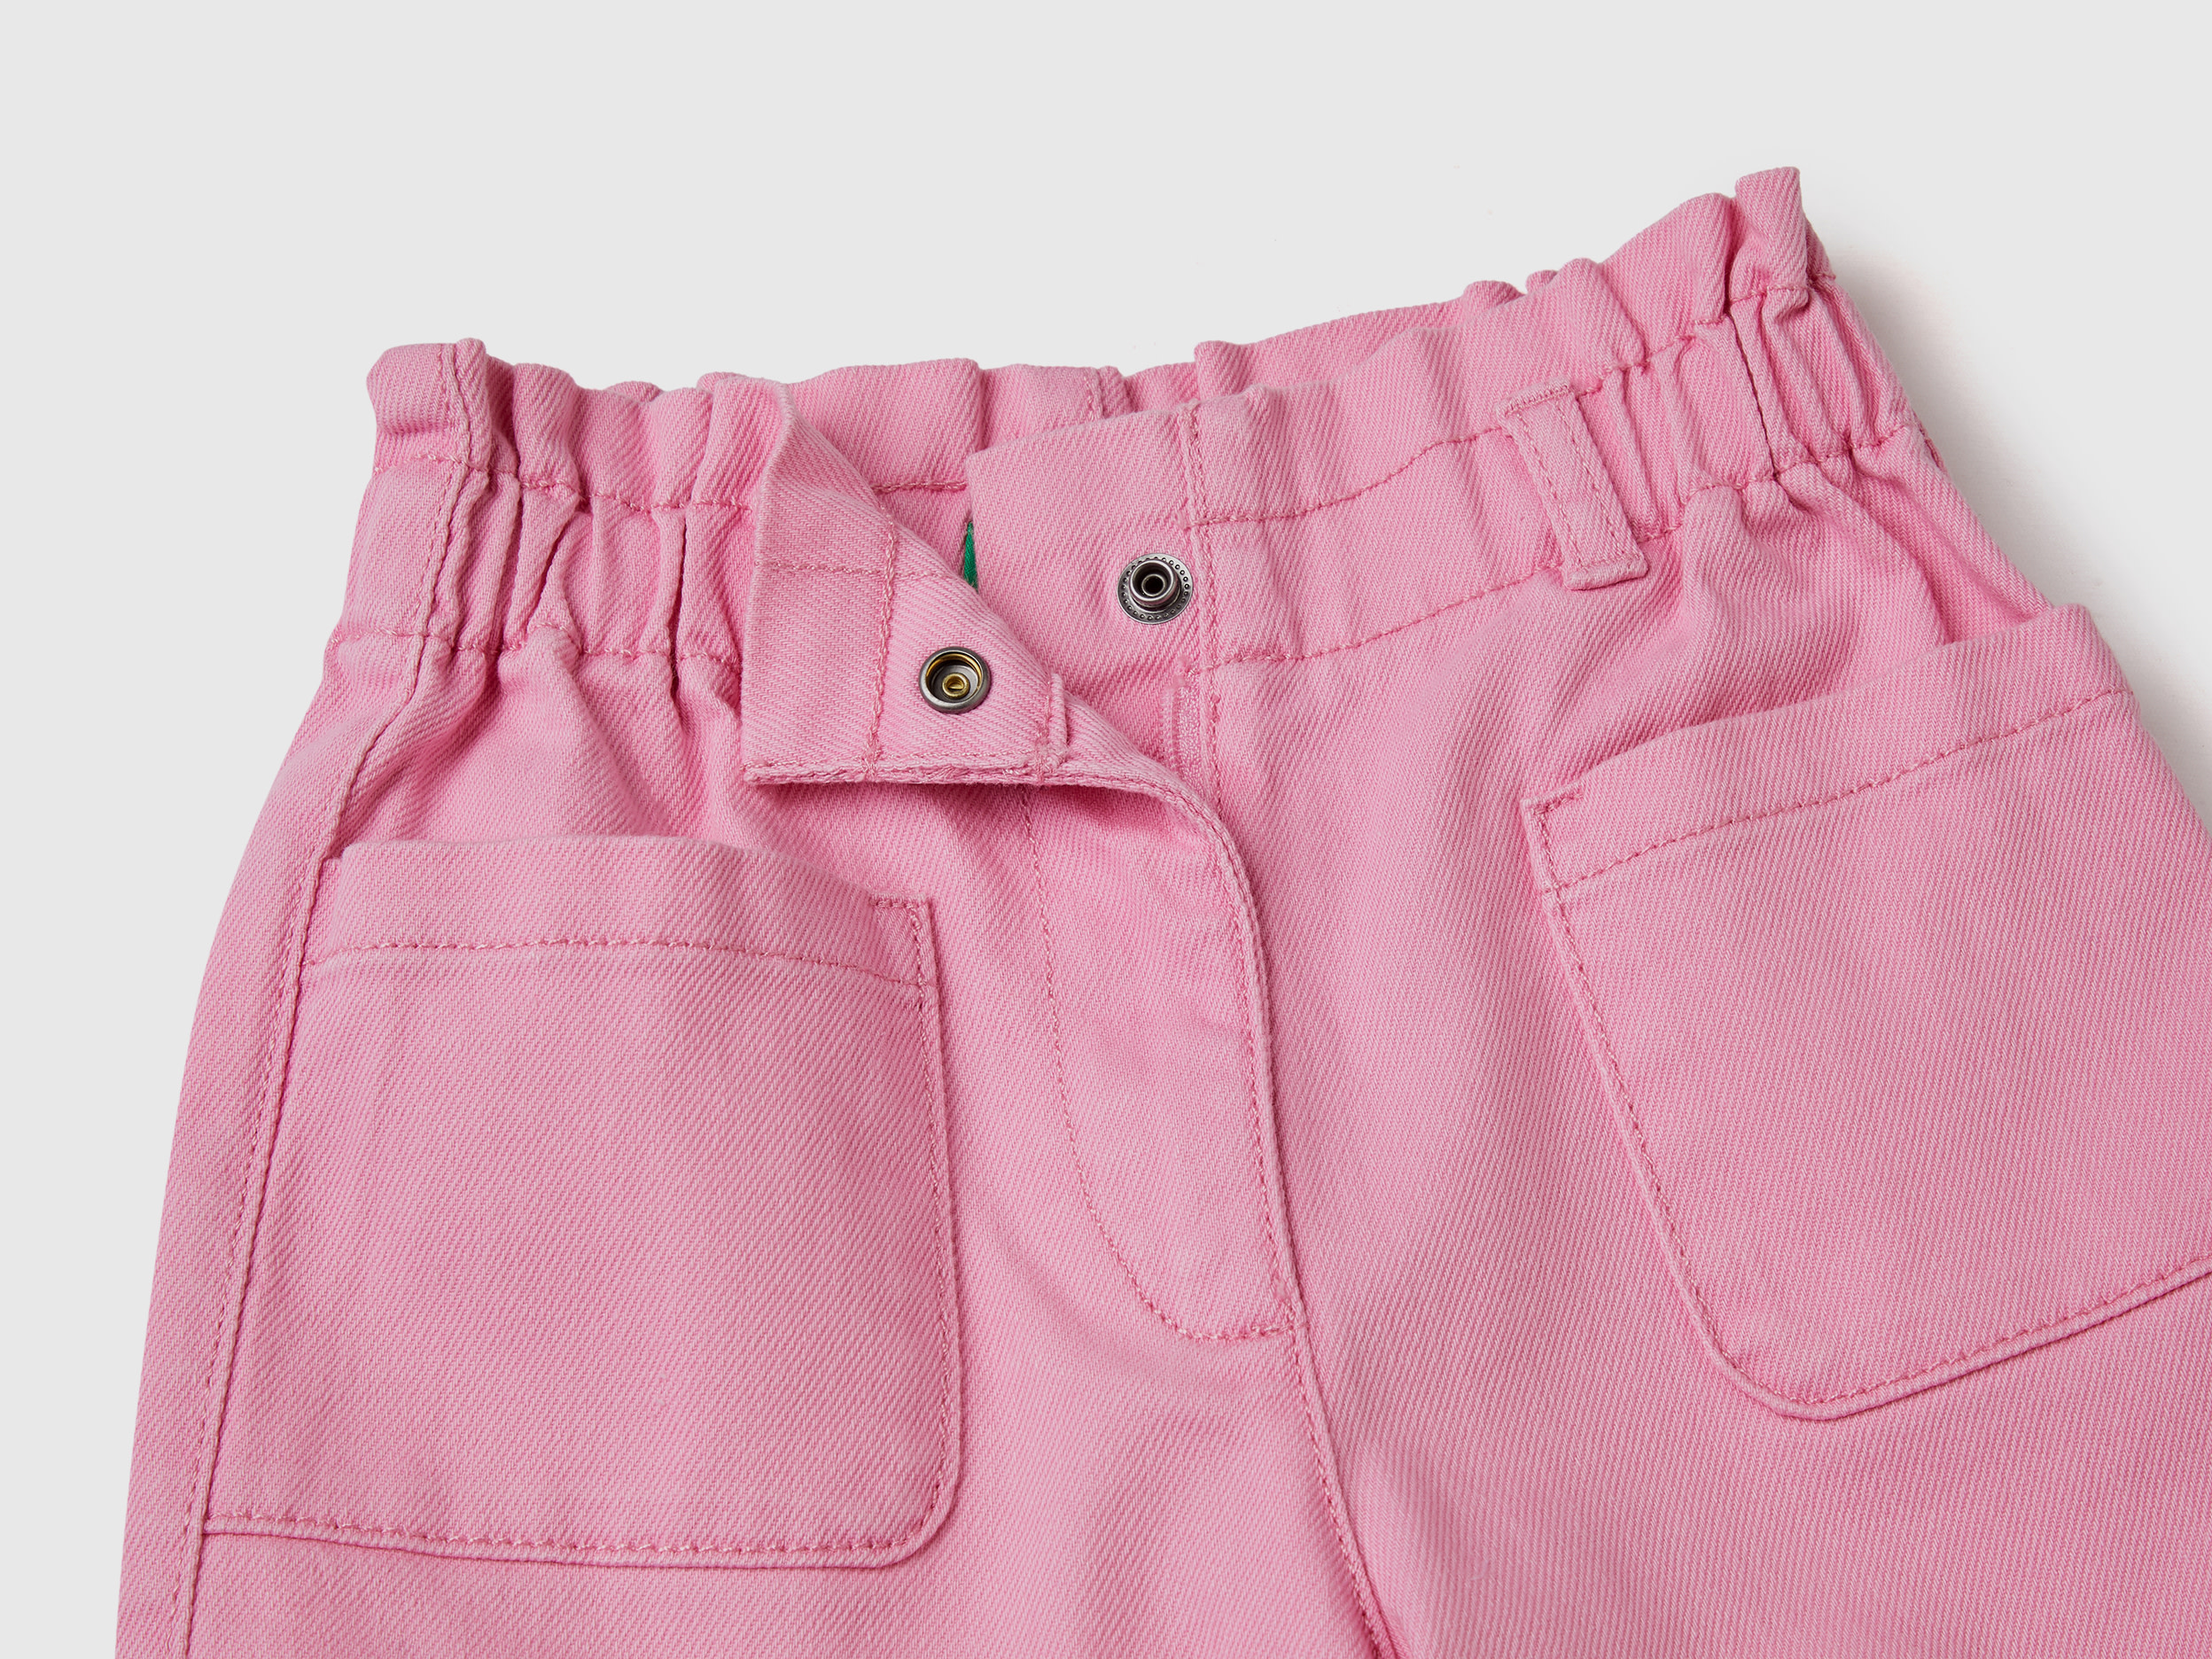 Benetton, Paperbag Trousers, Taglia 12-18, Pink, Kids